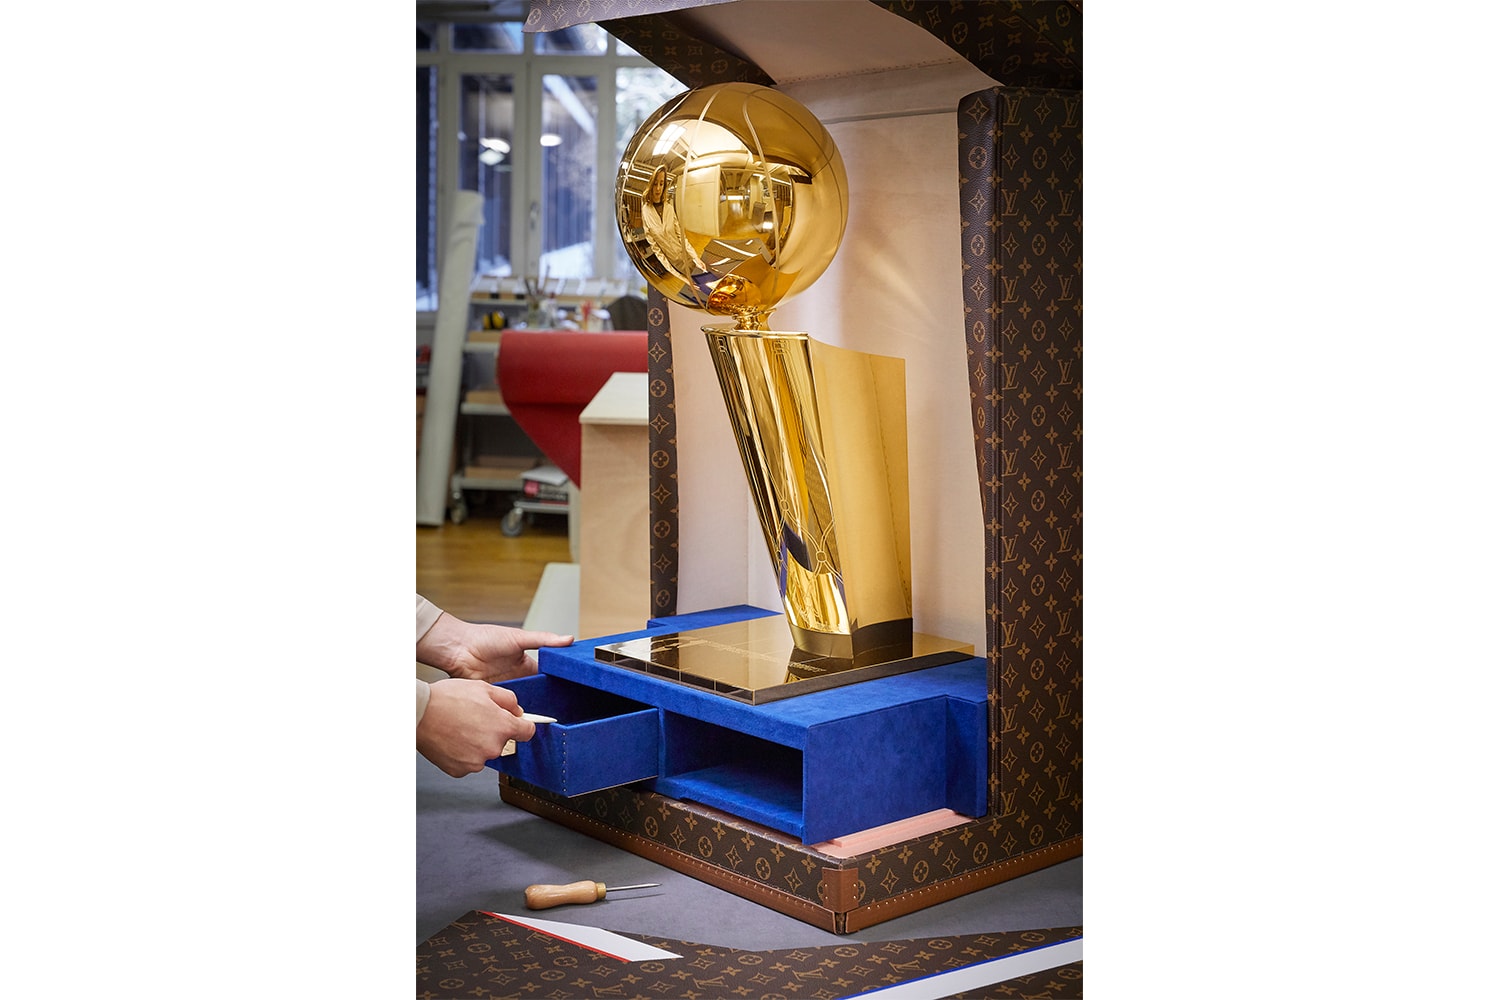 Louis Vuitton x NBA Trophy Ring Gold